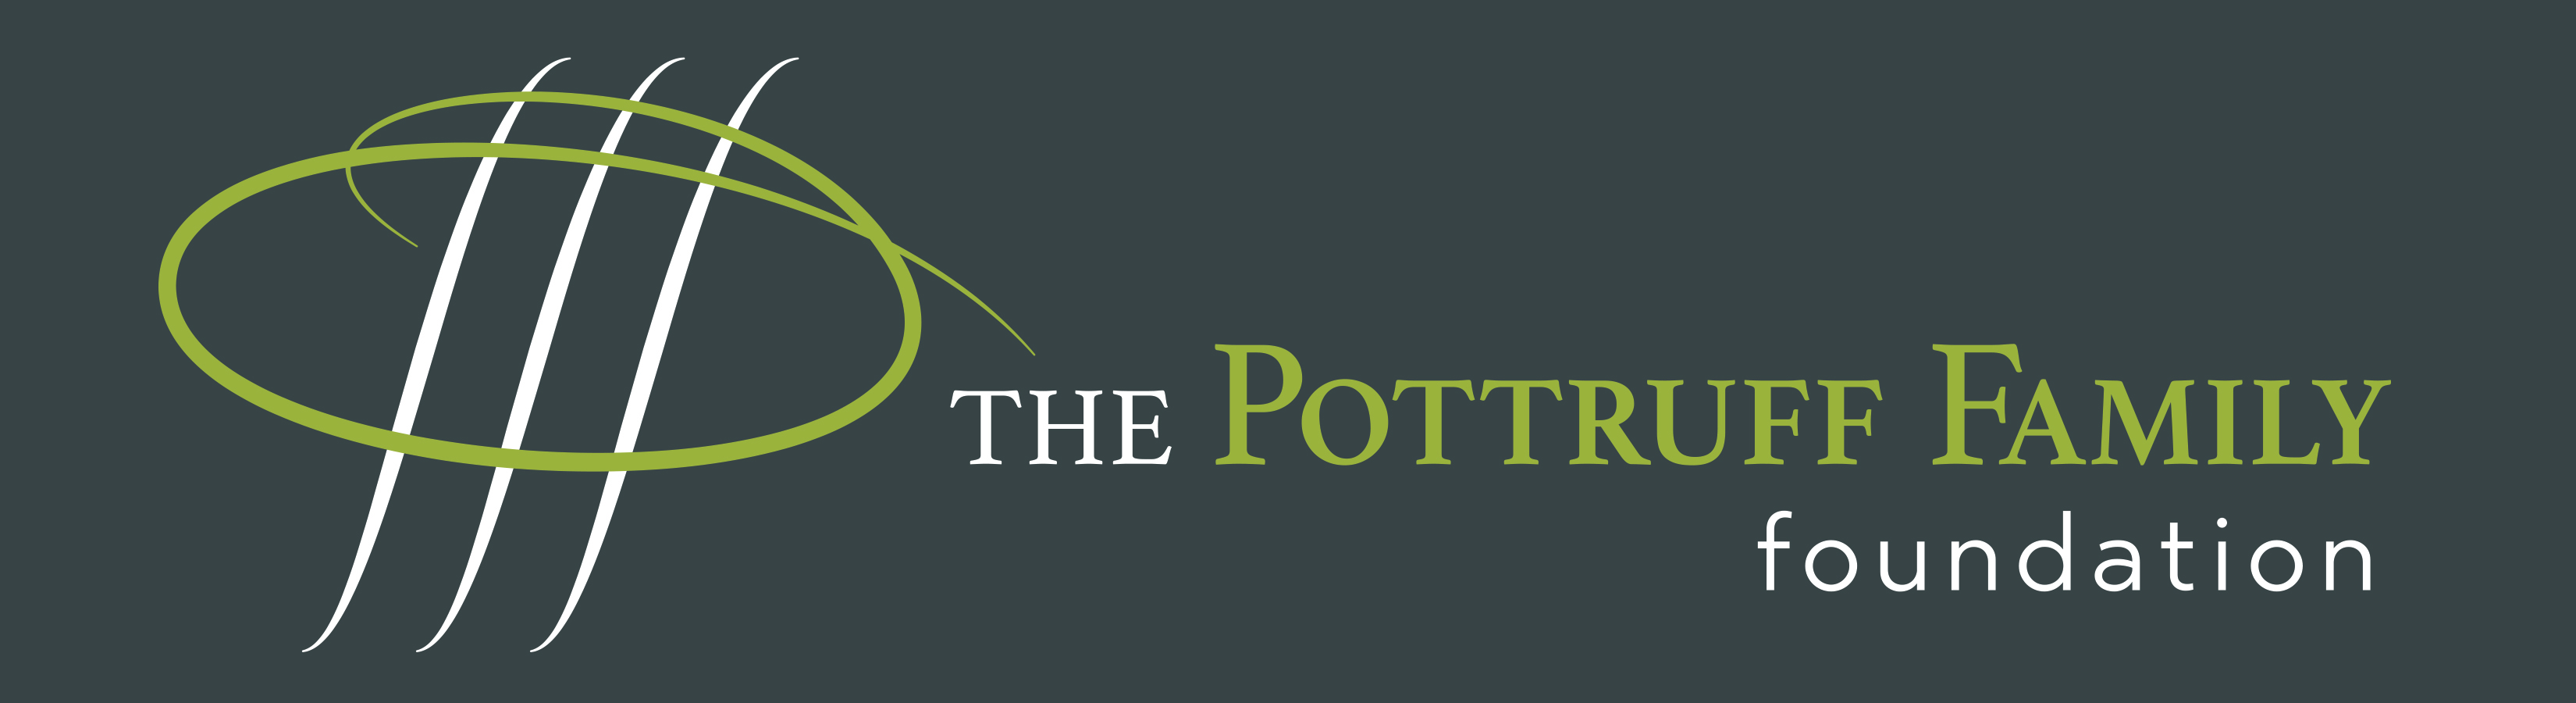 the Pottruff Family Foundation